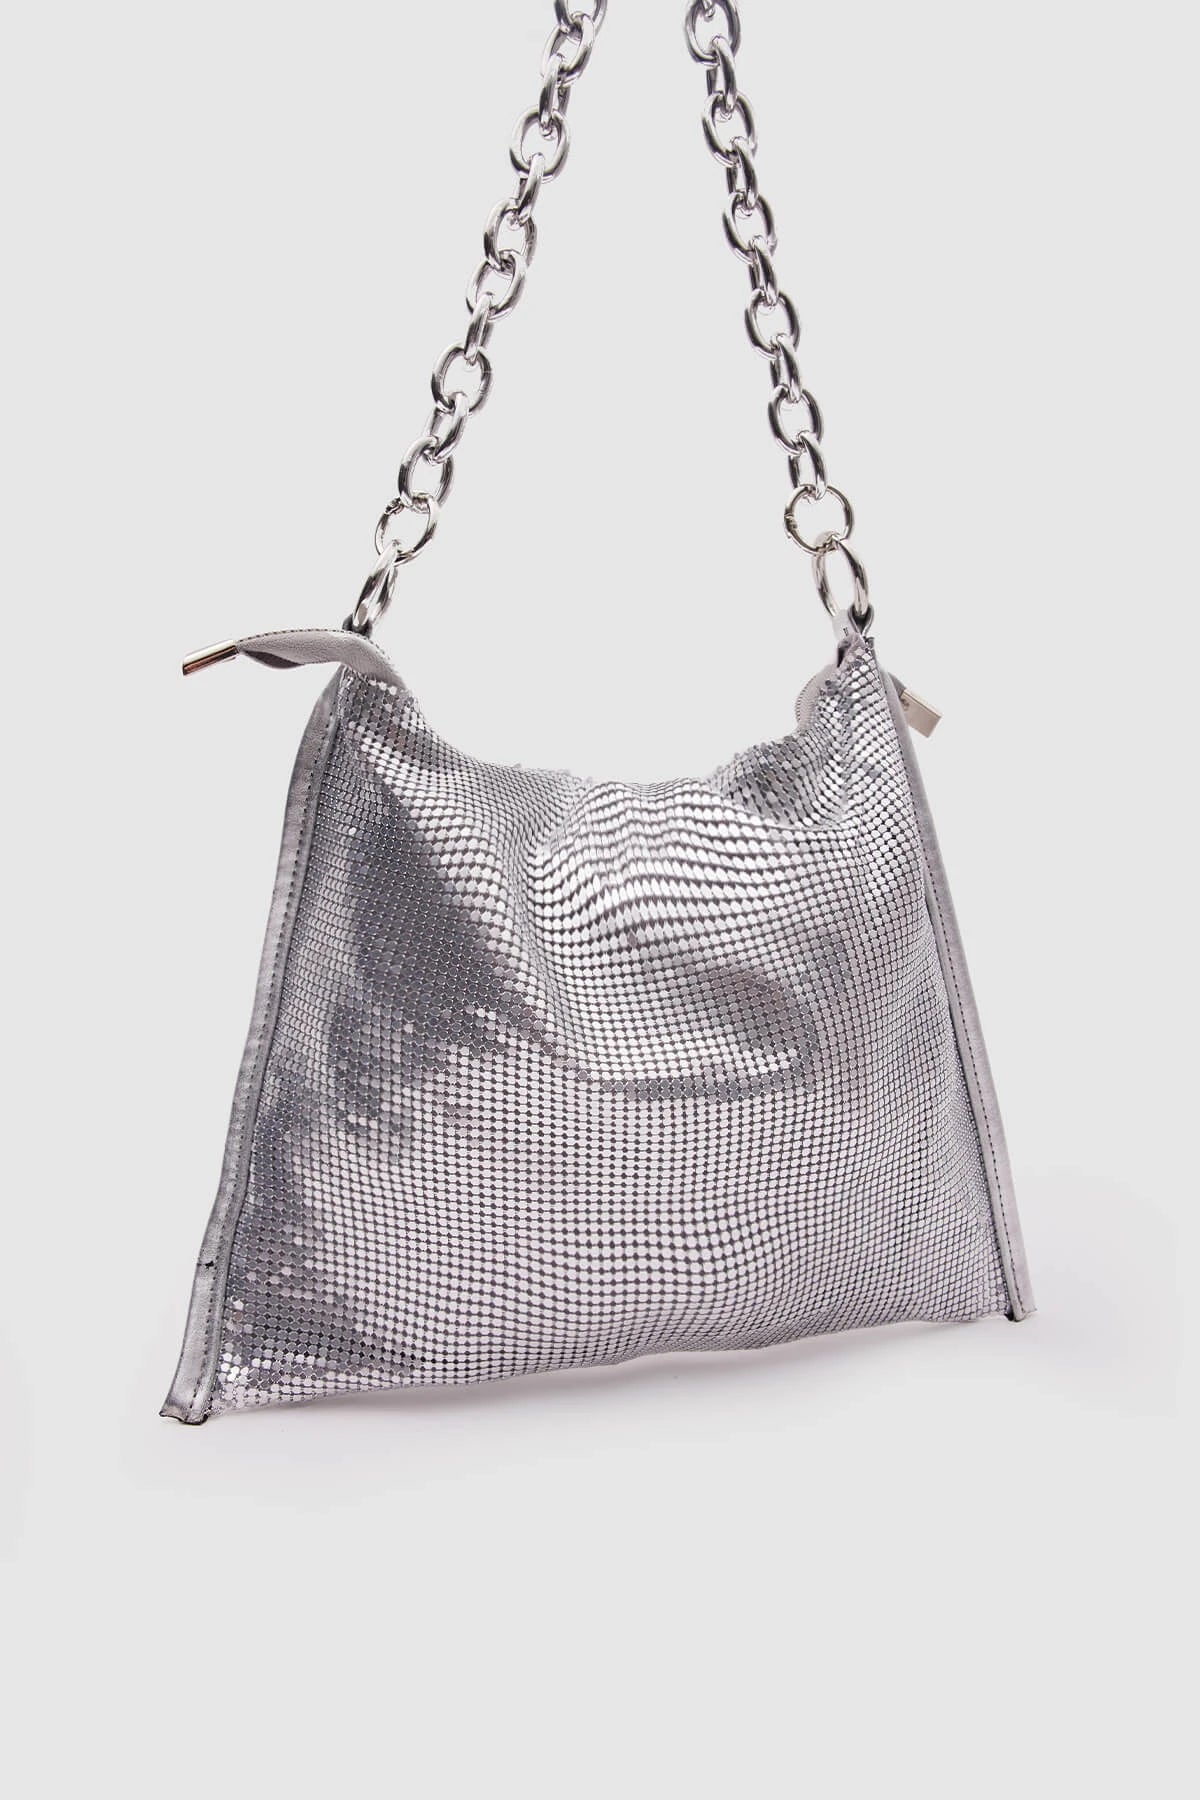 Metal Armor Chain Strap Bag handbags LUNARITY GARAGE Metallic  